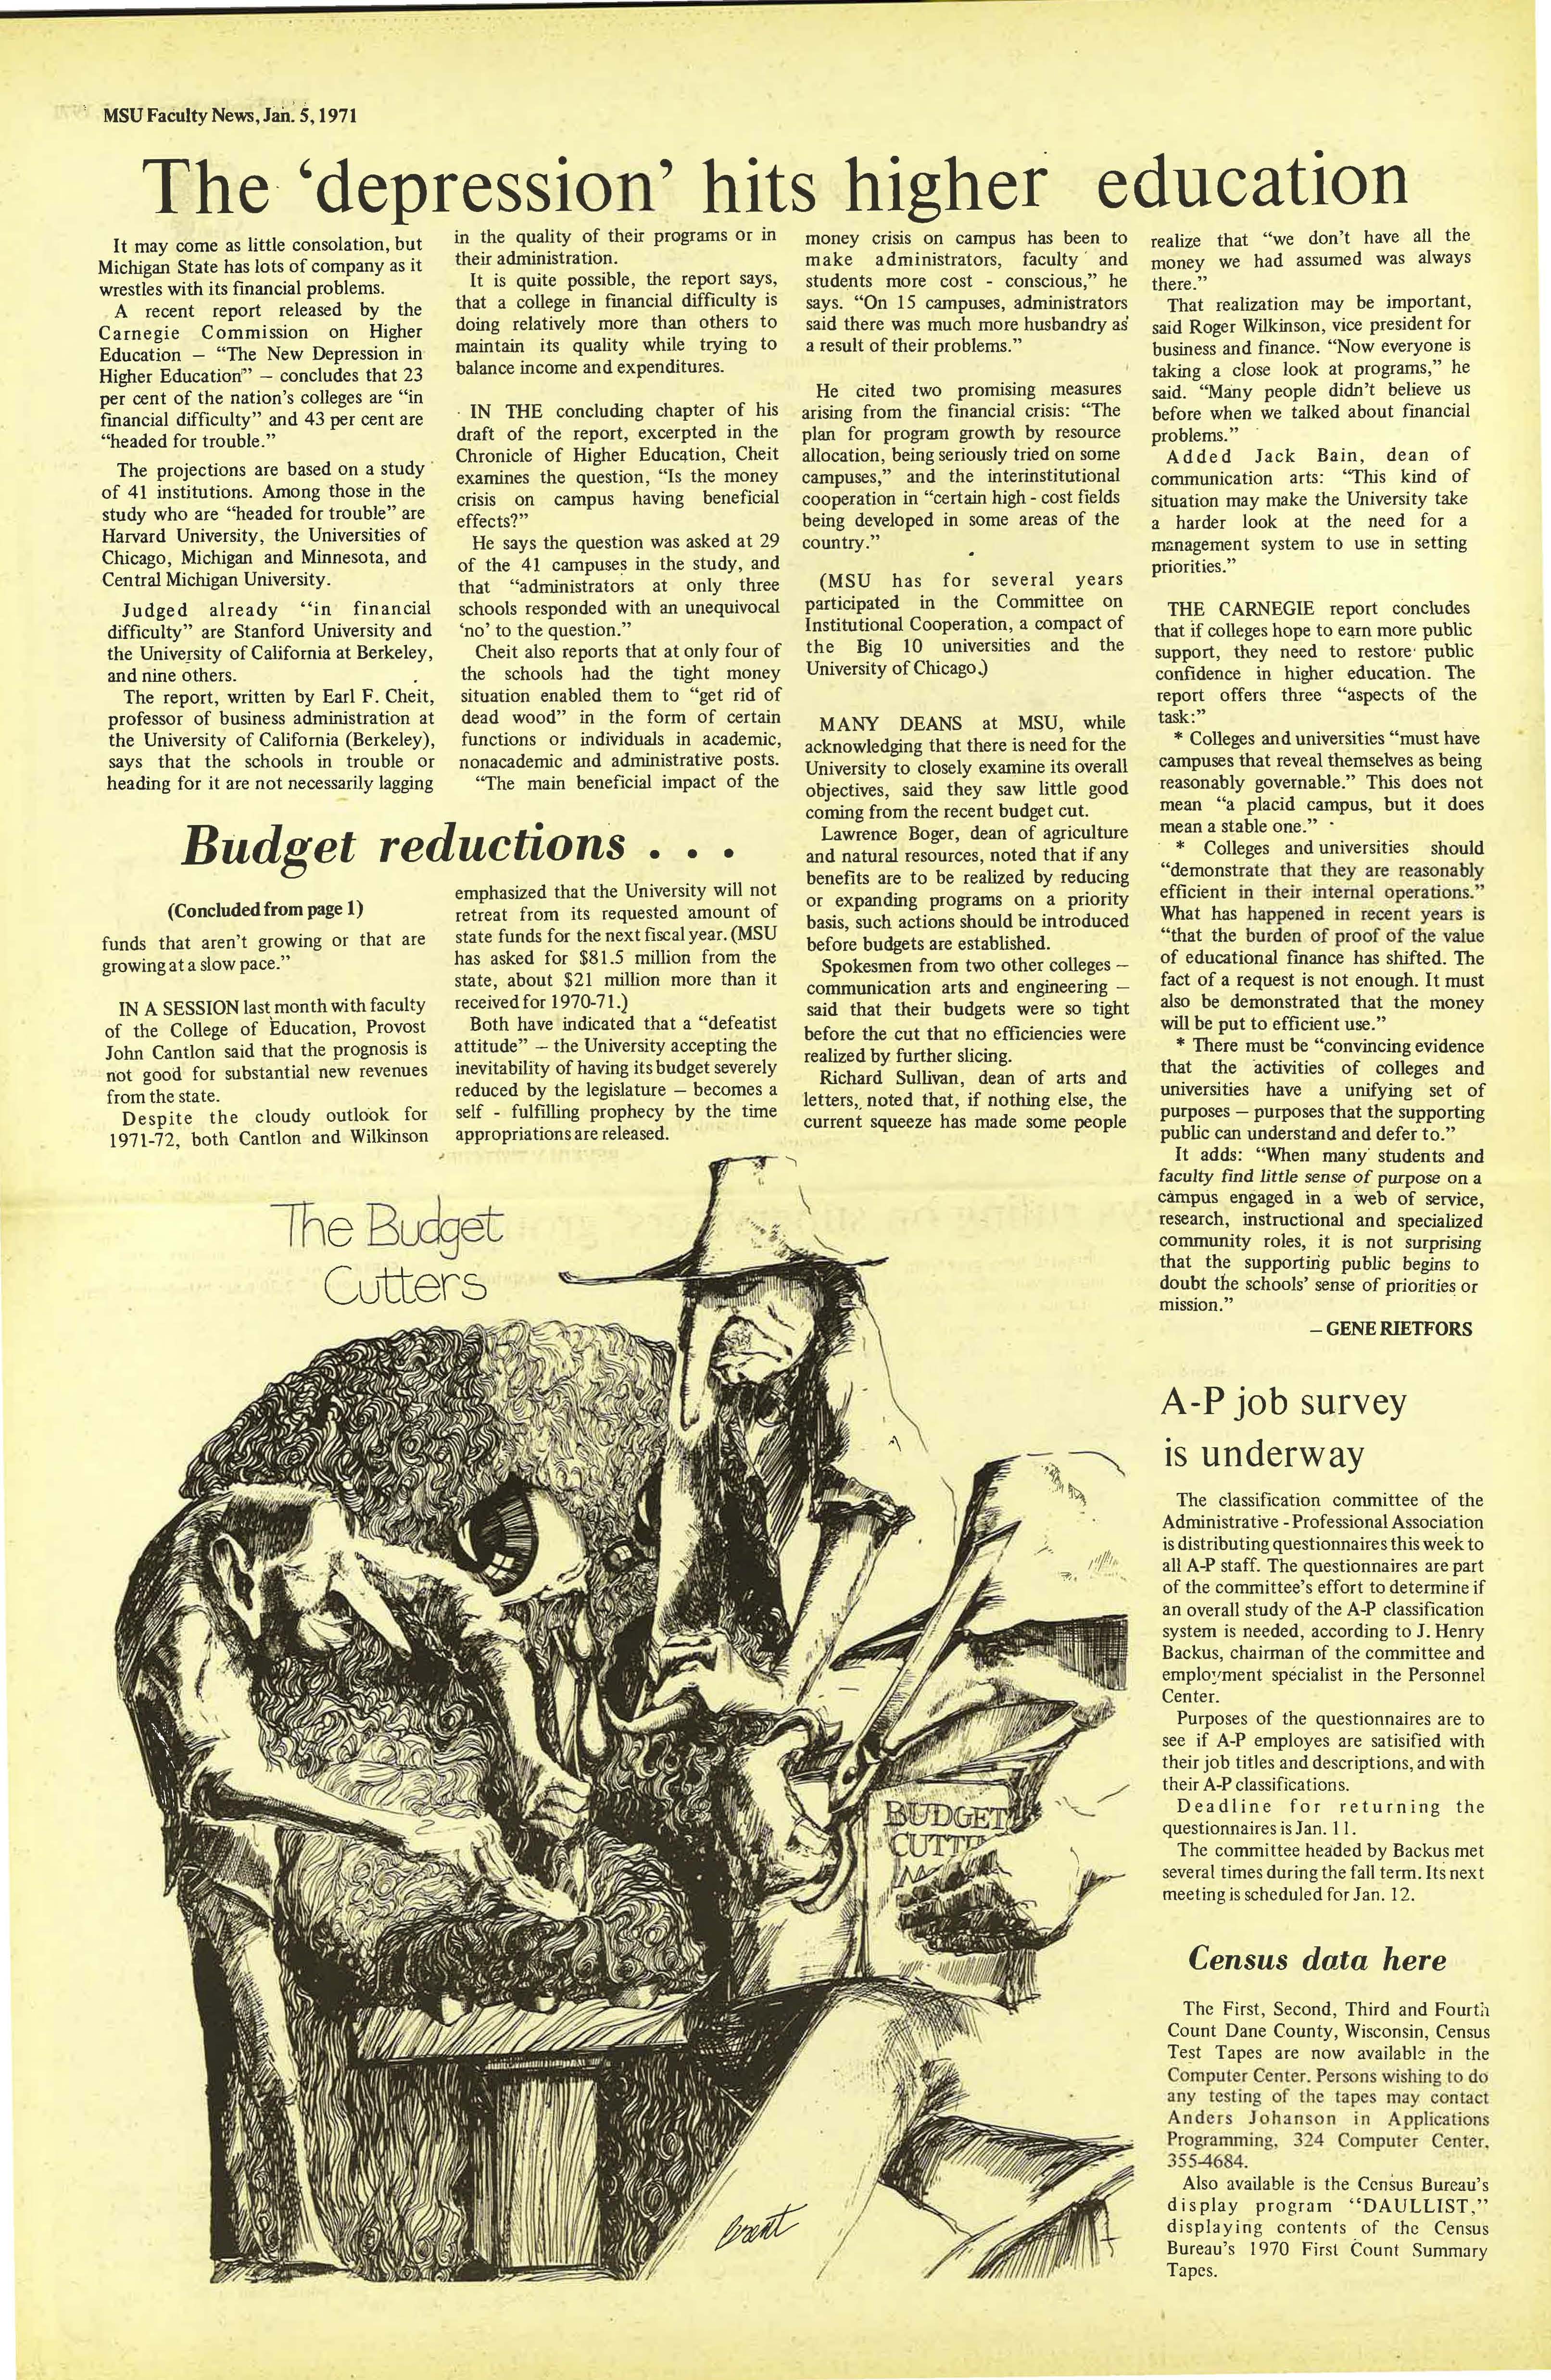 MSU News Bulletin, Vol. 2, No. 11, January 5, 1971